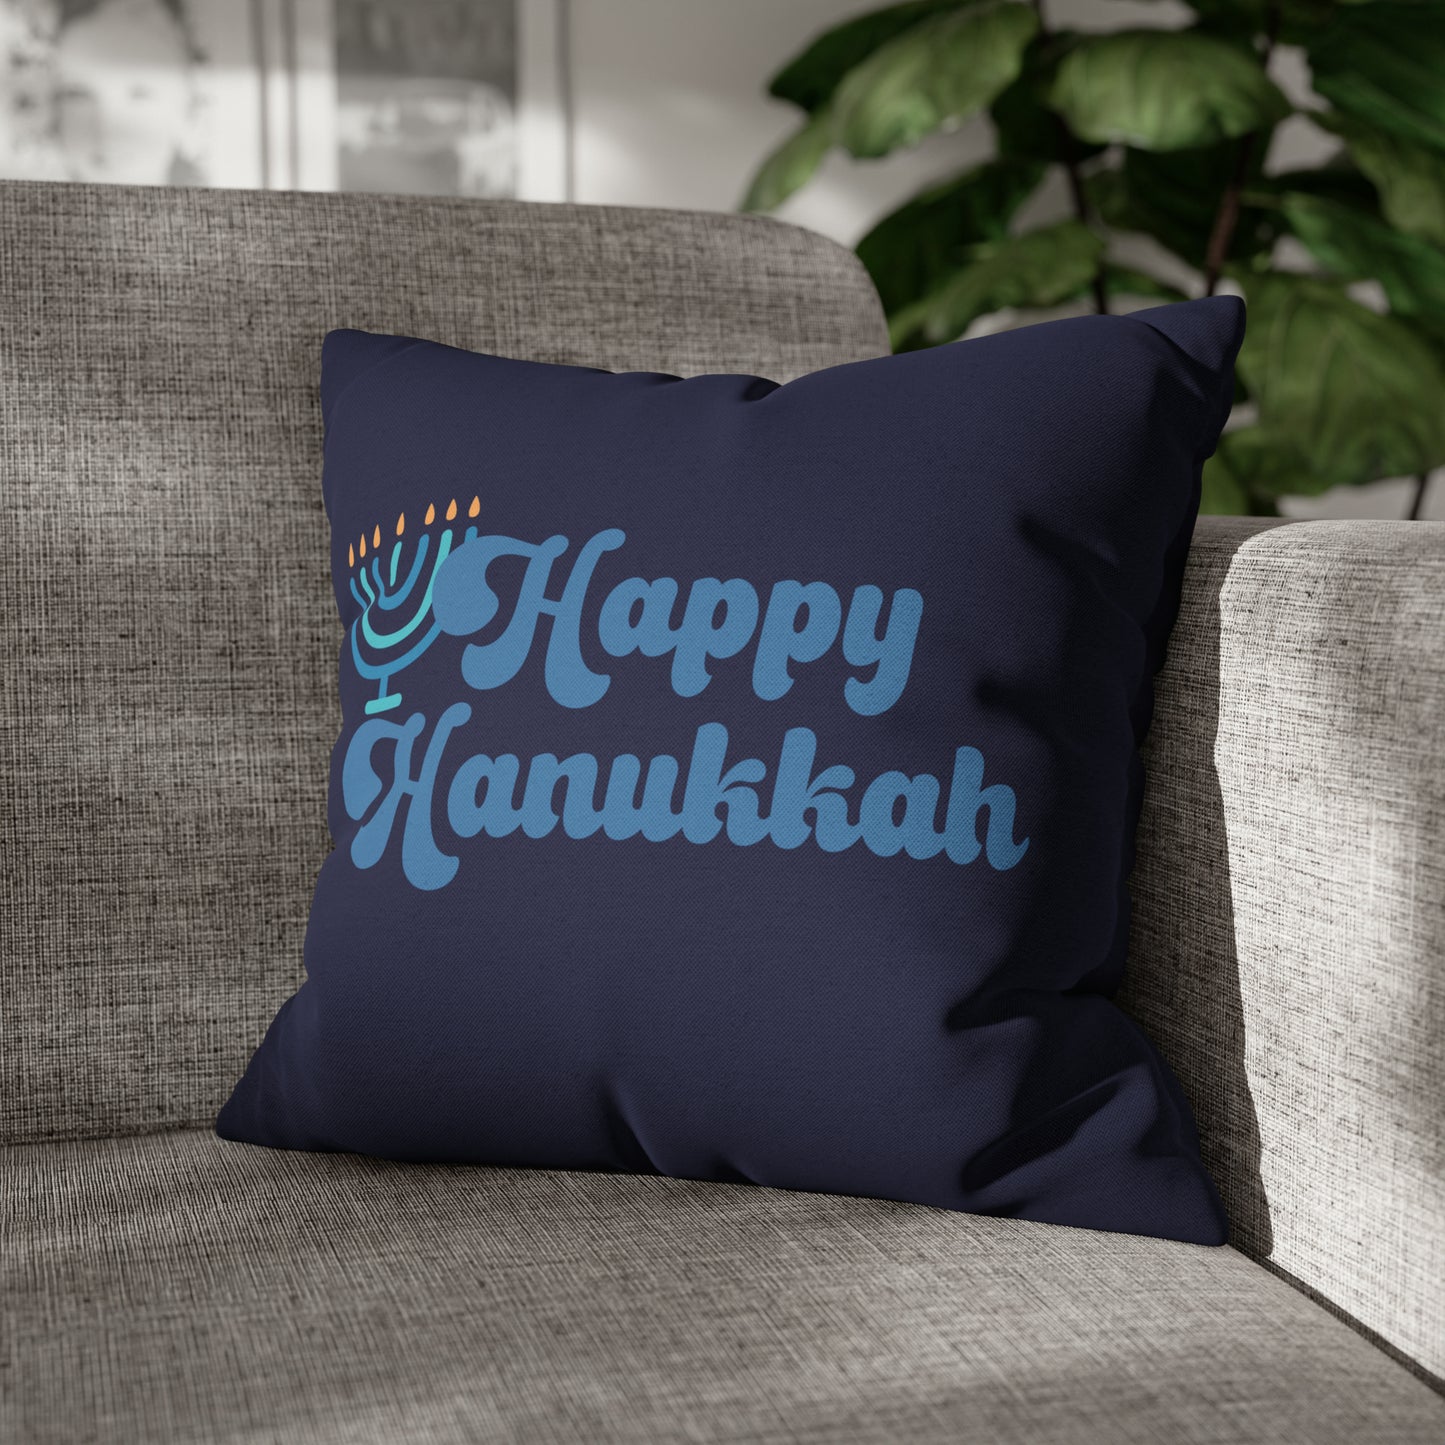 Retro "Happy Hanukkah" Hanukkah Pillow Cover